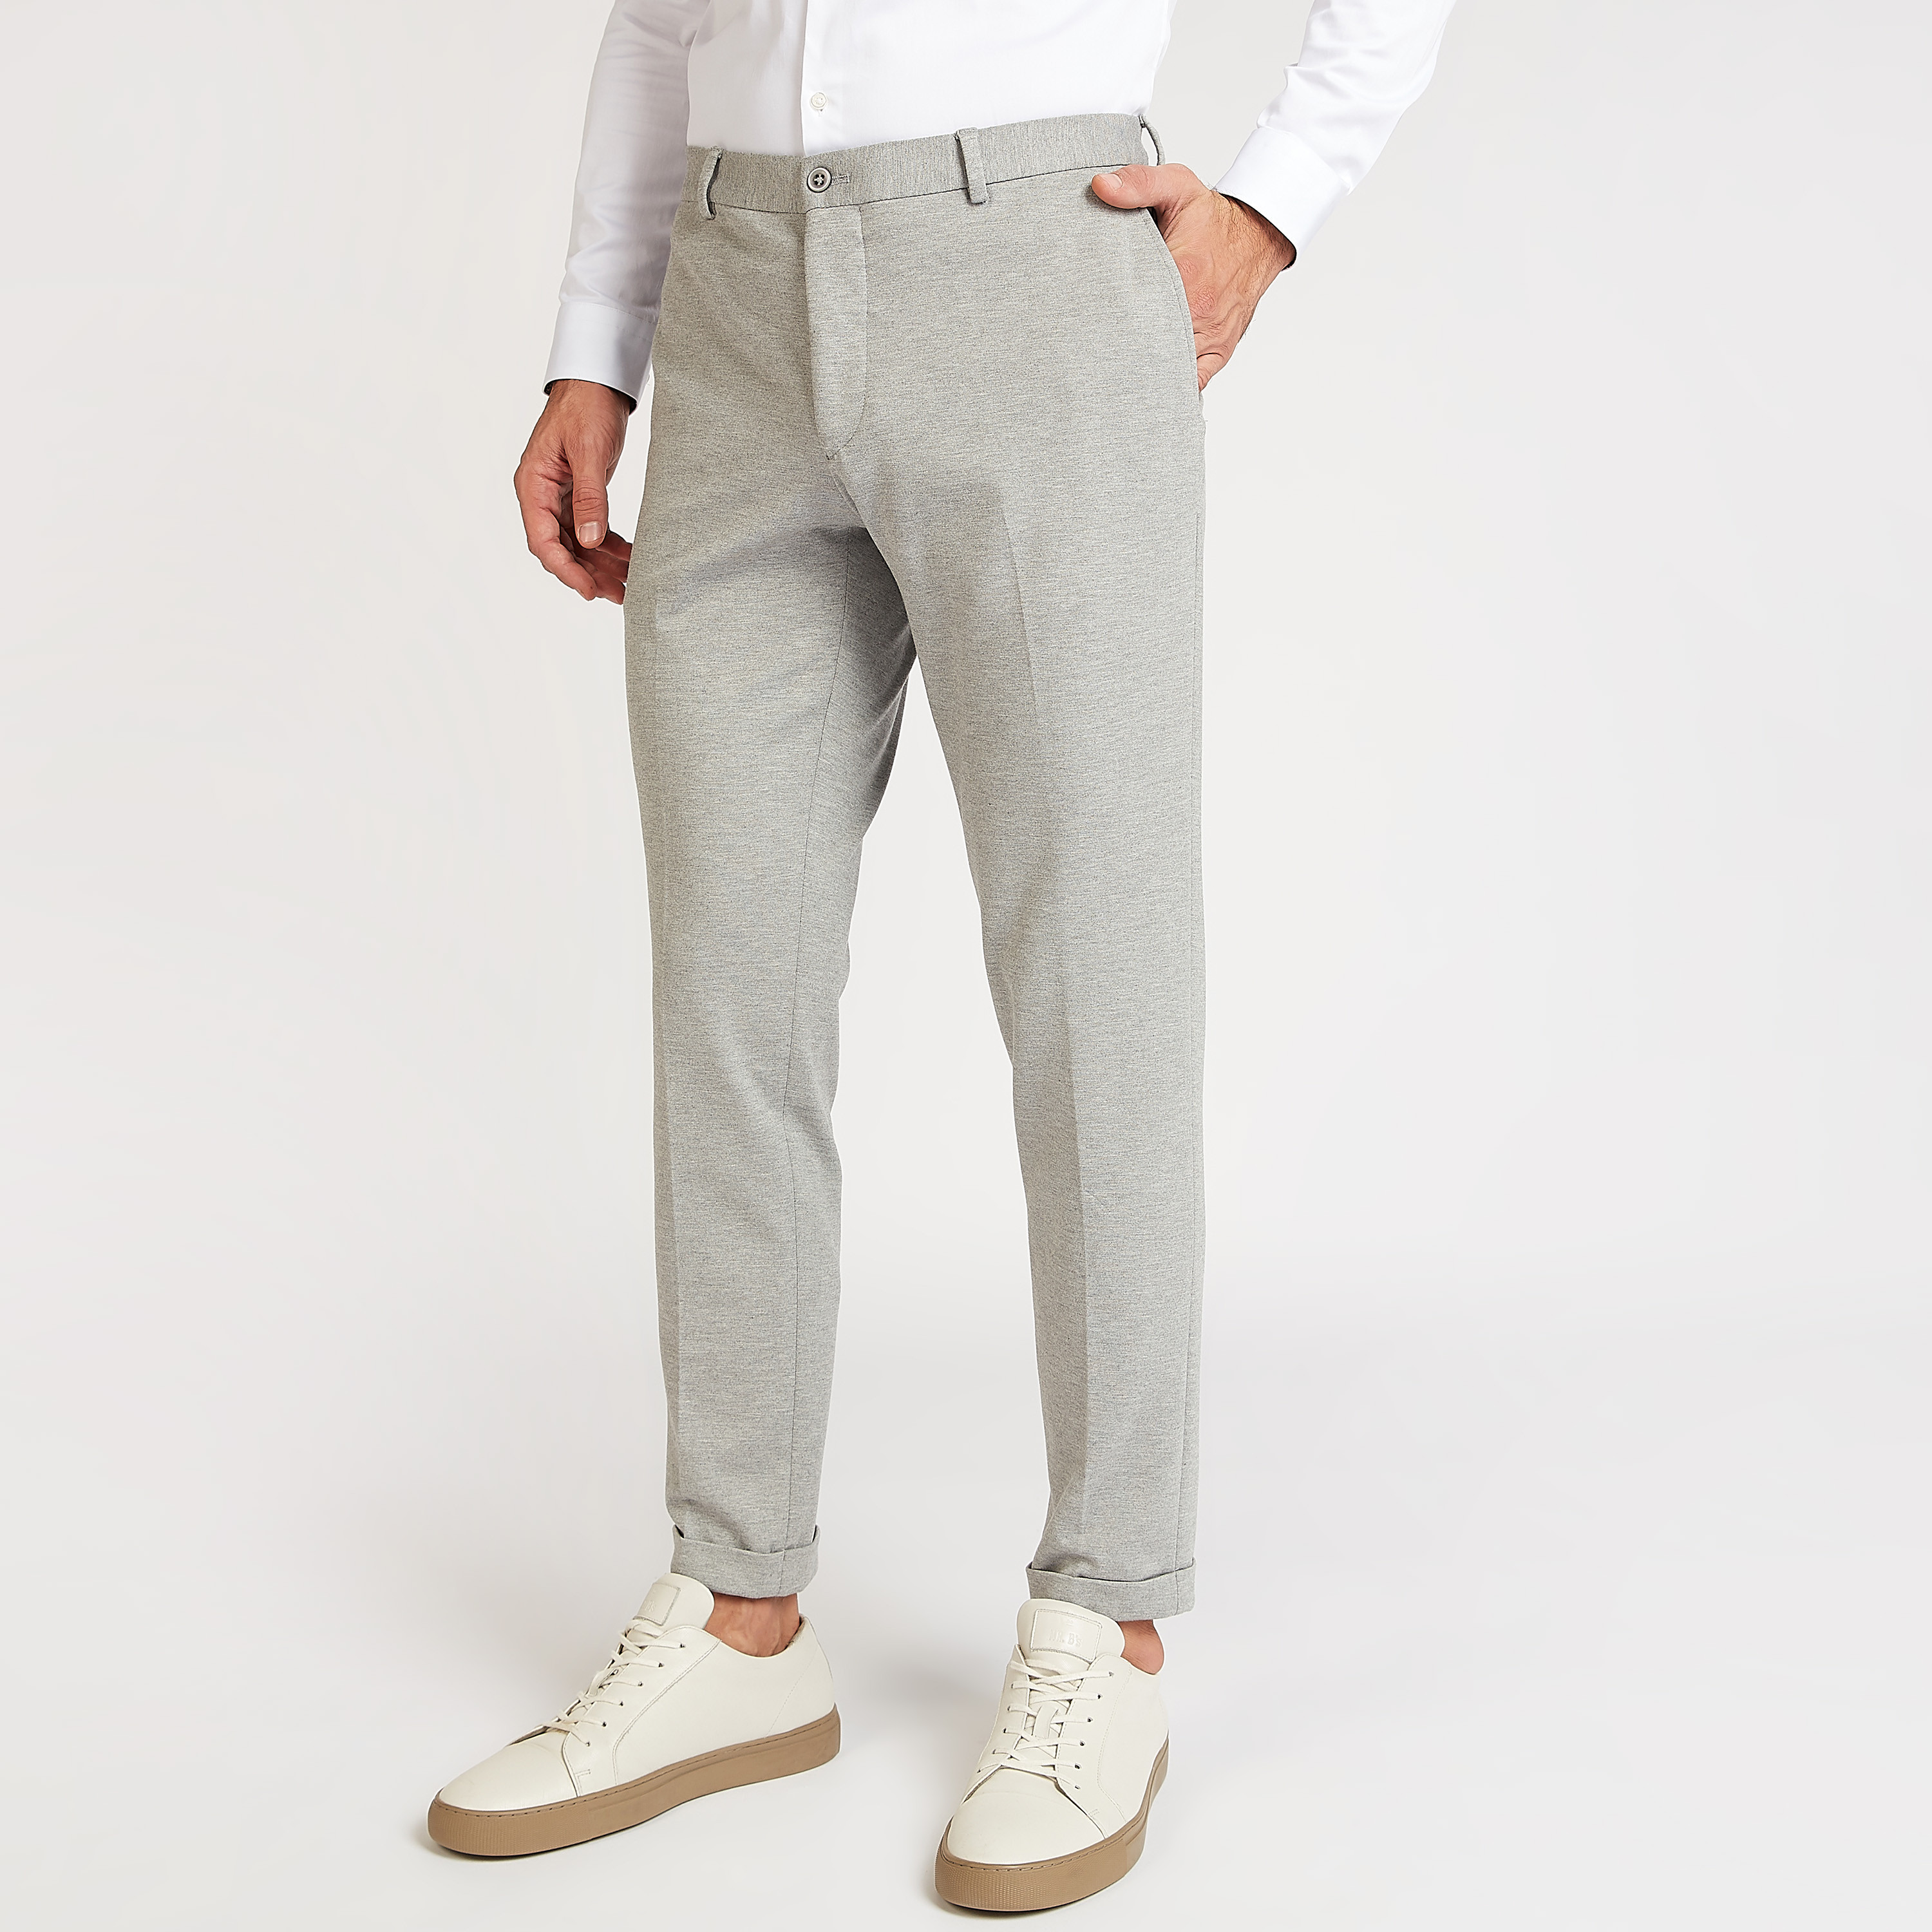 Buy Men's Regular Poly Cotton Formal Pant for Men | Formal Trousers Pants  (30, Black) at Amazon.in